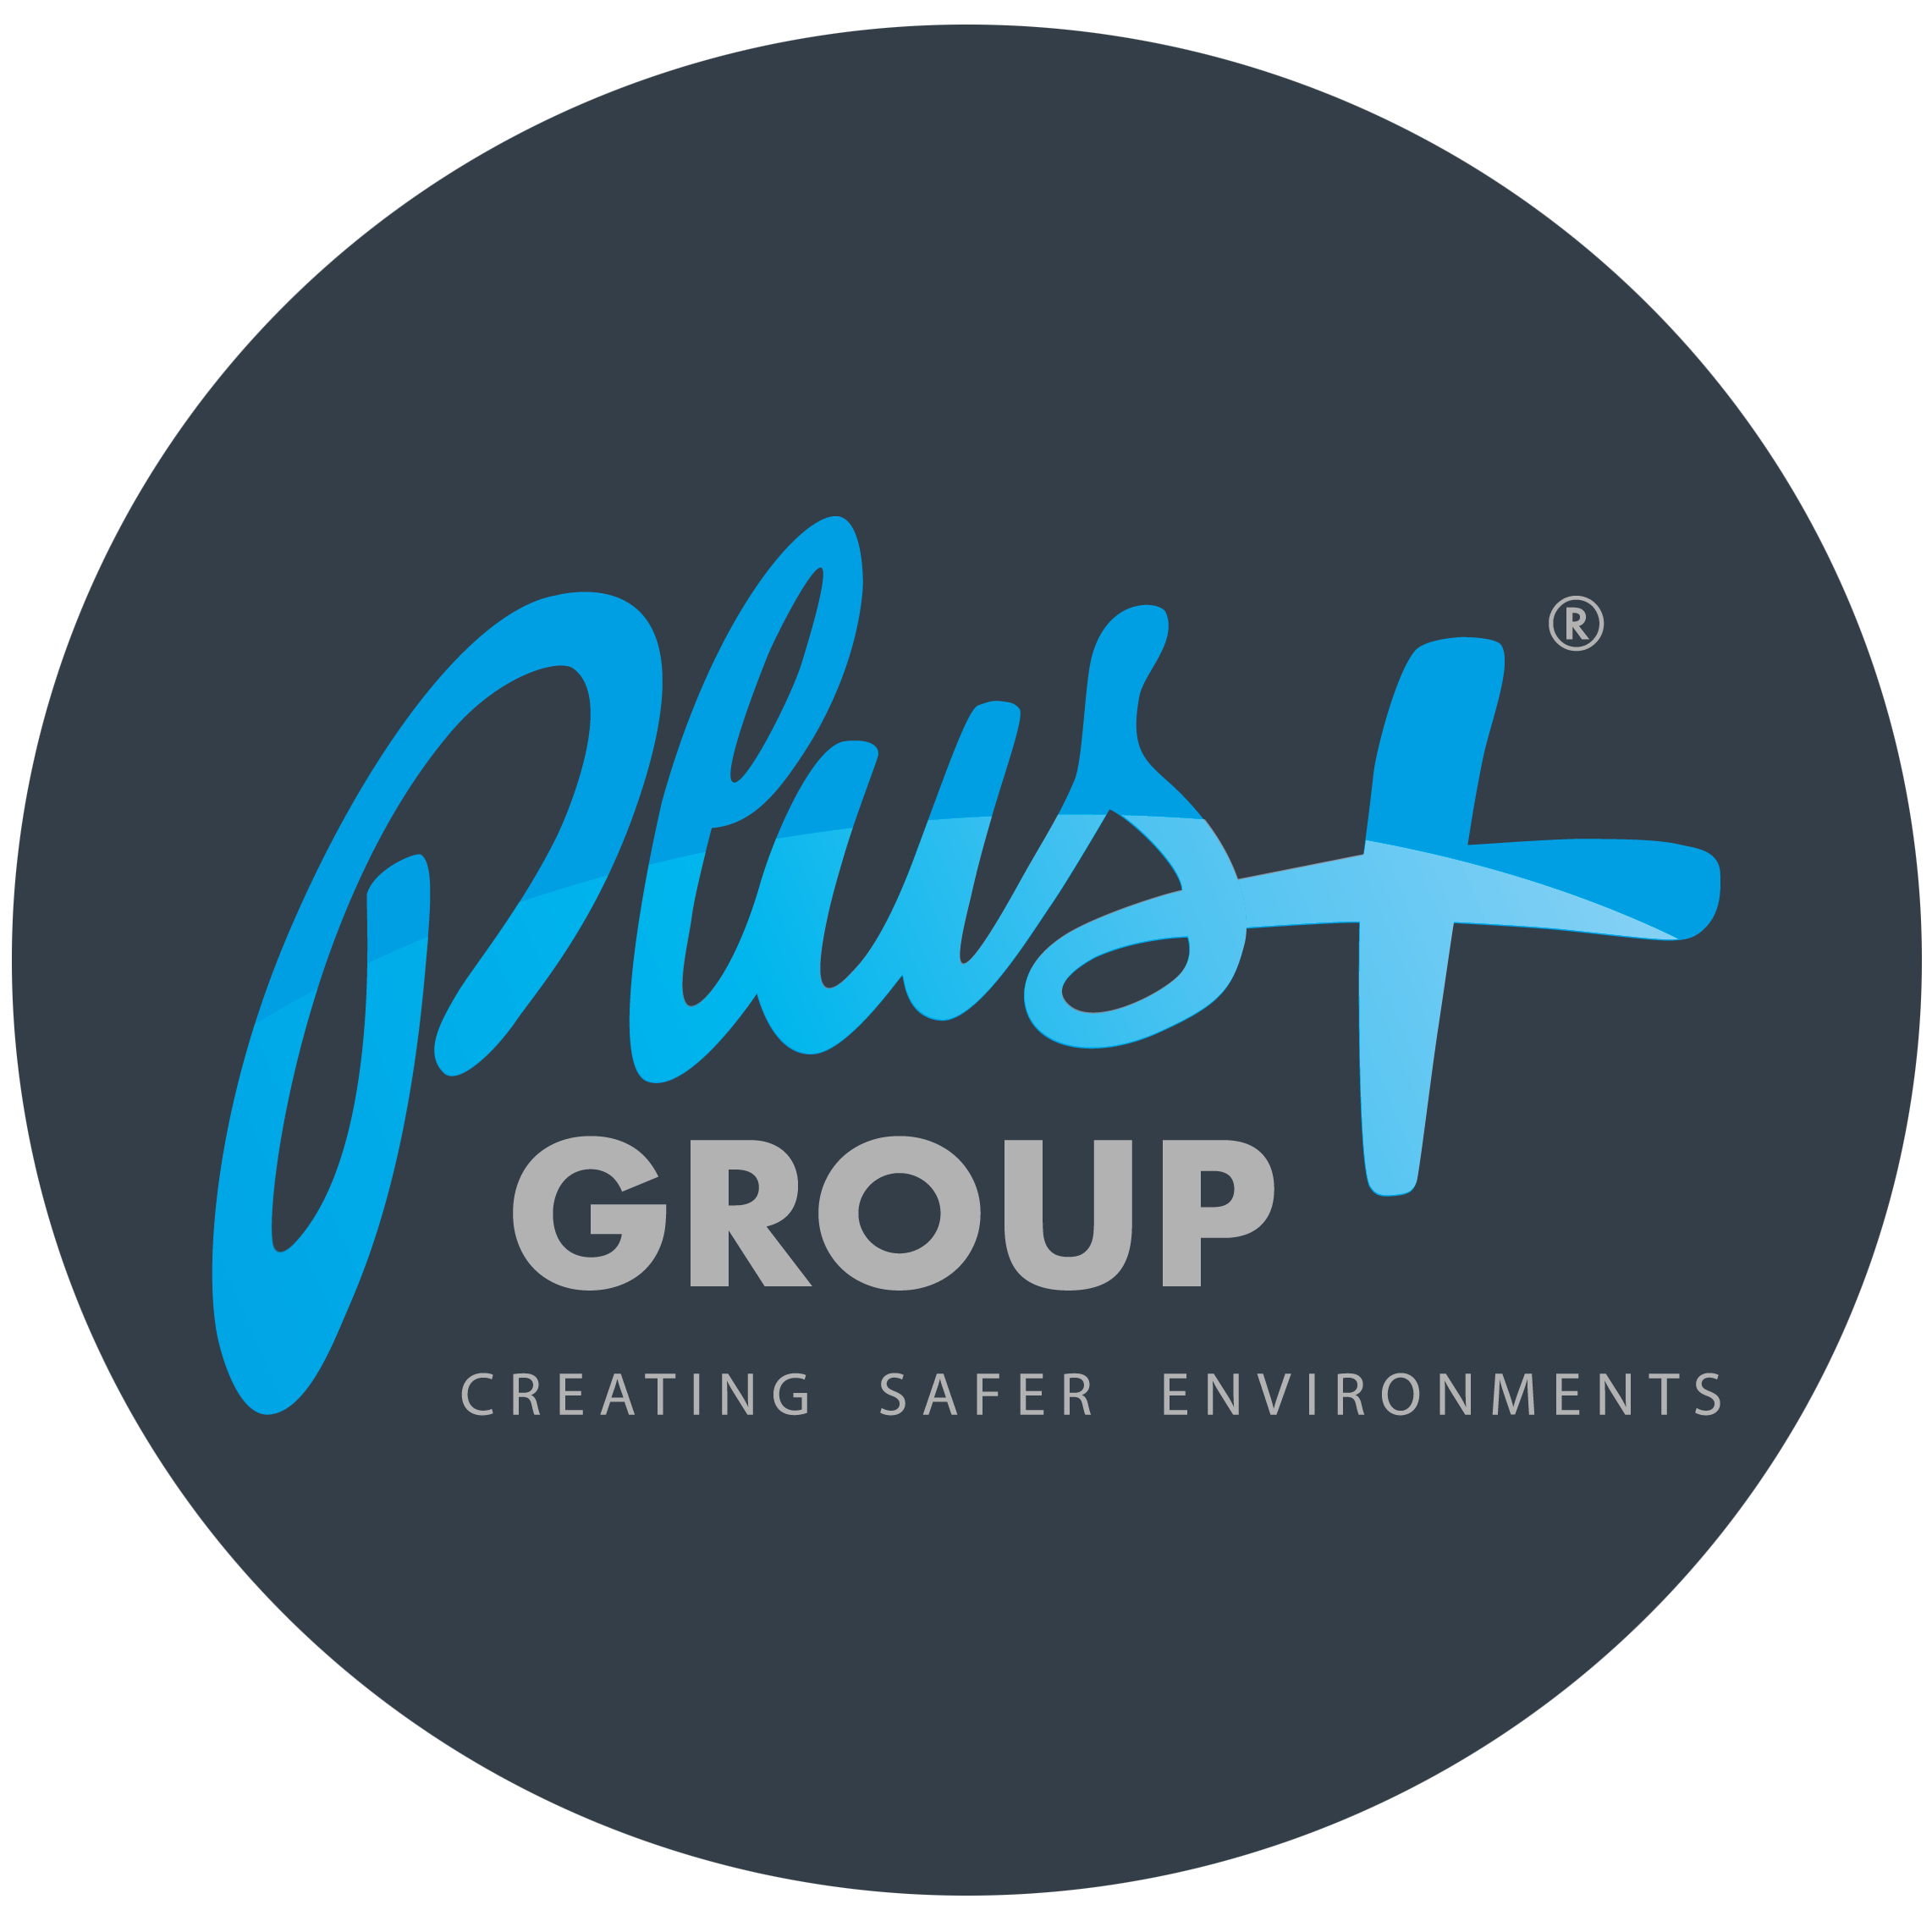 Plus Group Ltd